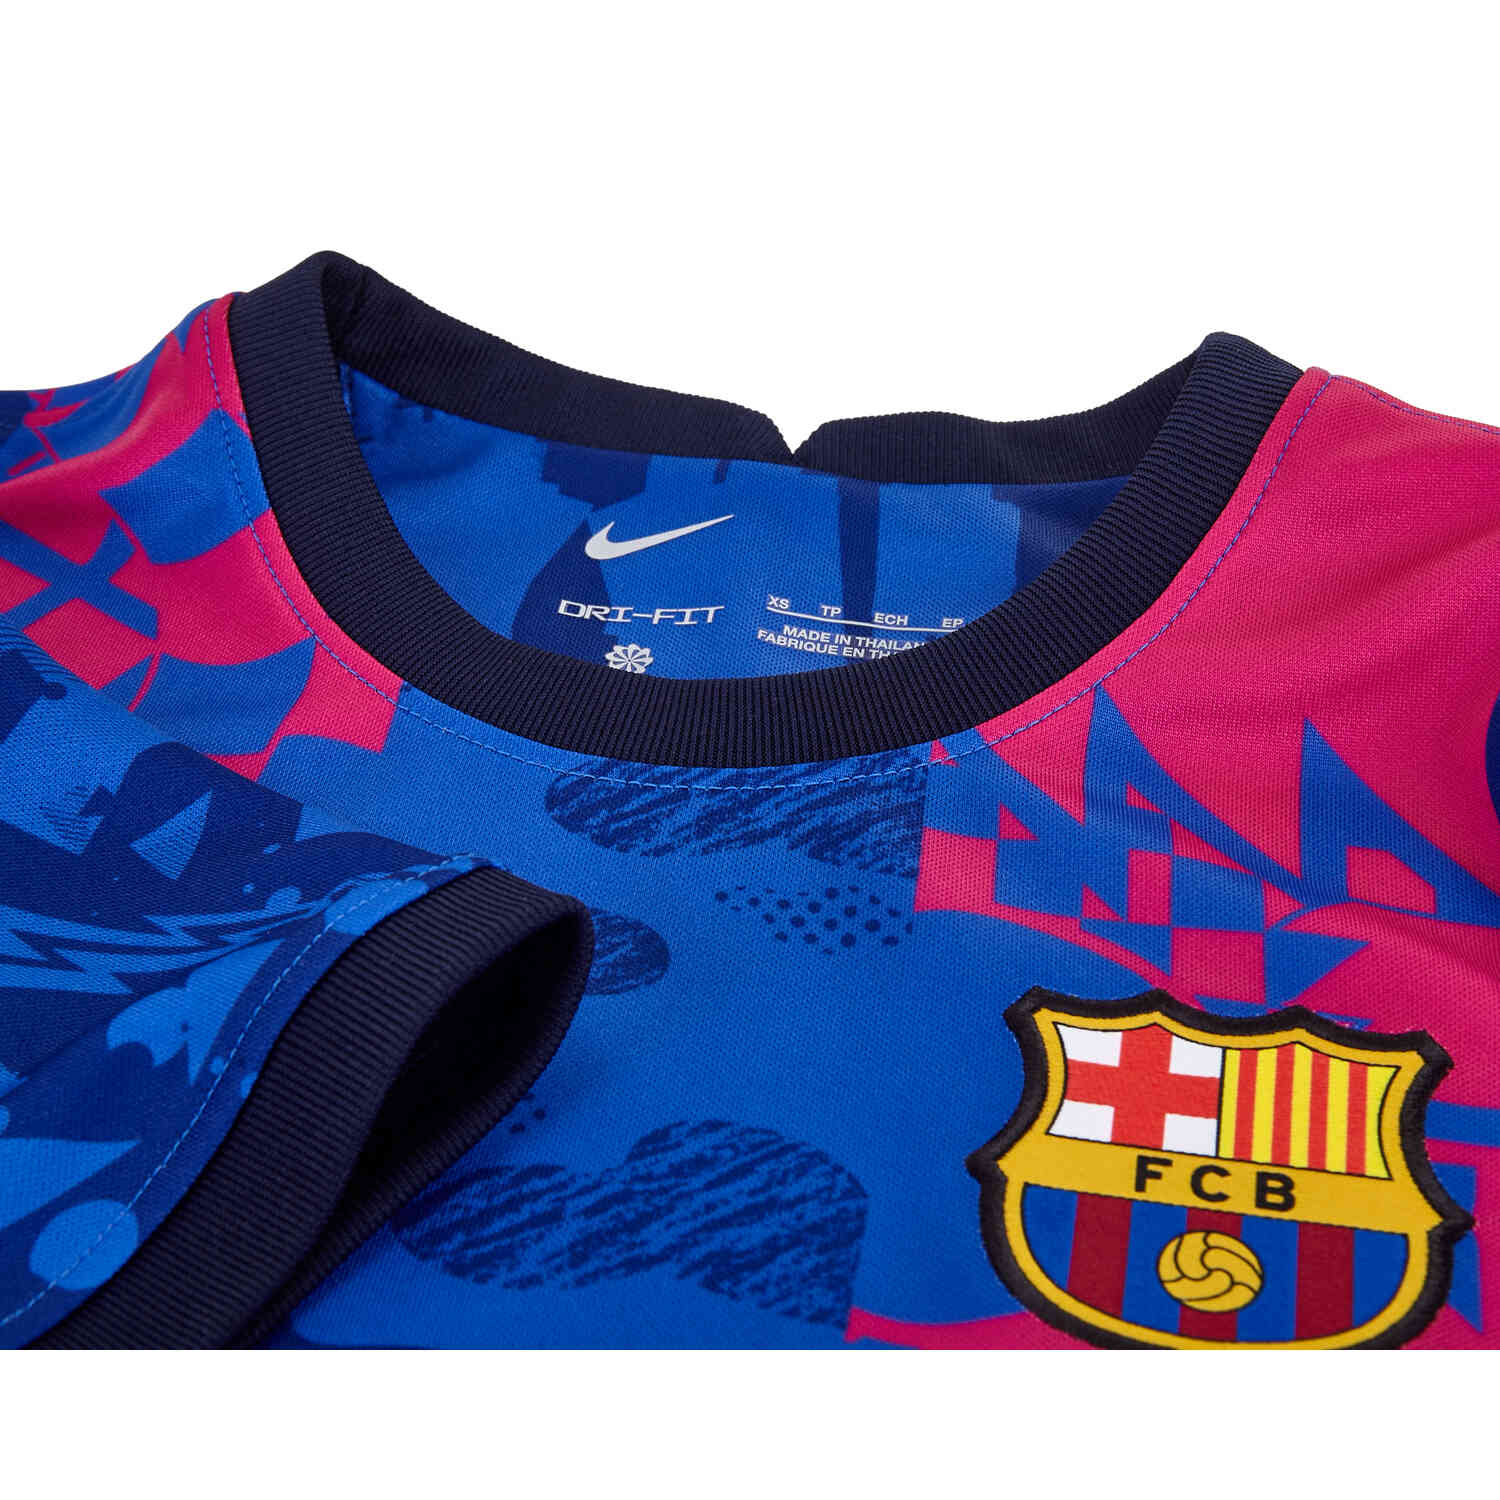 FC Barcelona 2021/22 Stadium Third Women's Nike Dri-FIT Soccer Jersey